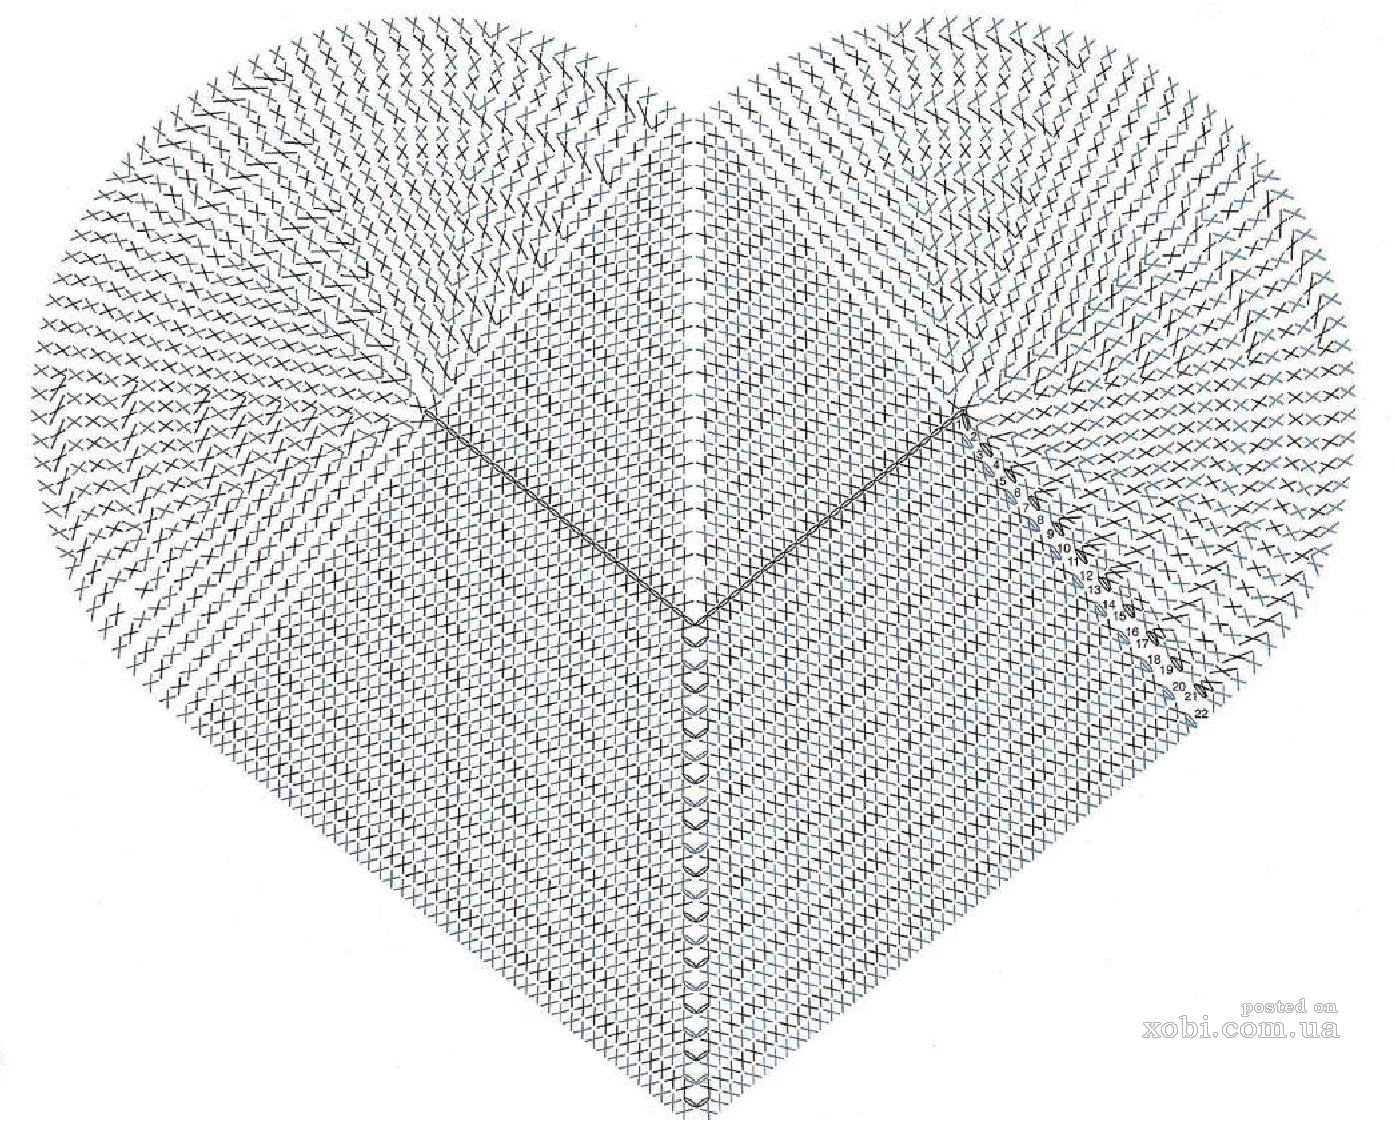 22 варианта вязанного крючком сердца с фото, схемами и видео мк